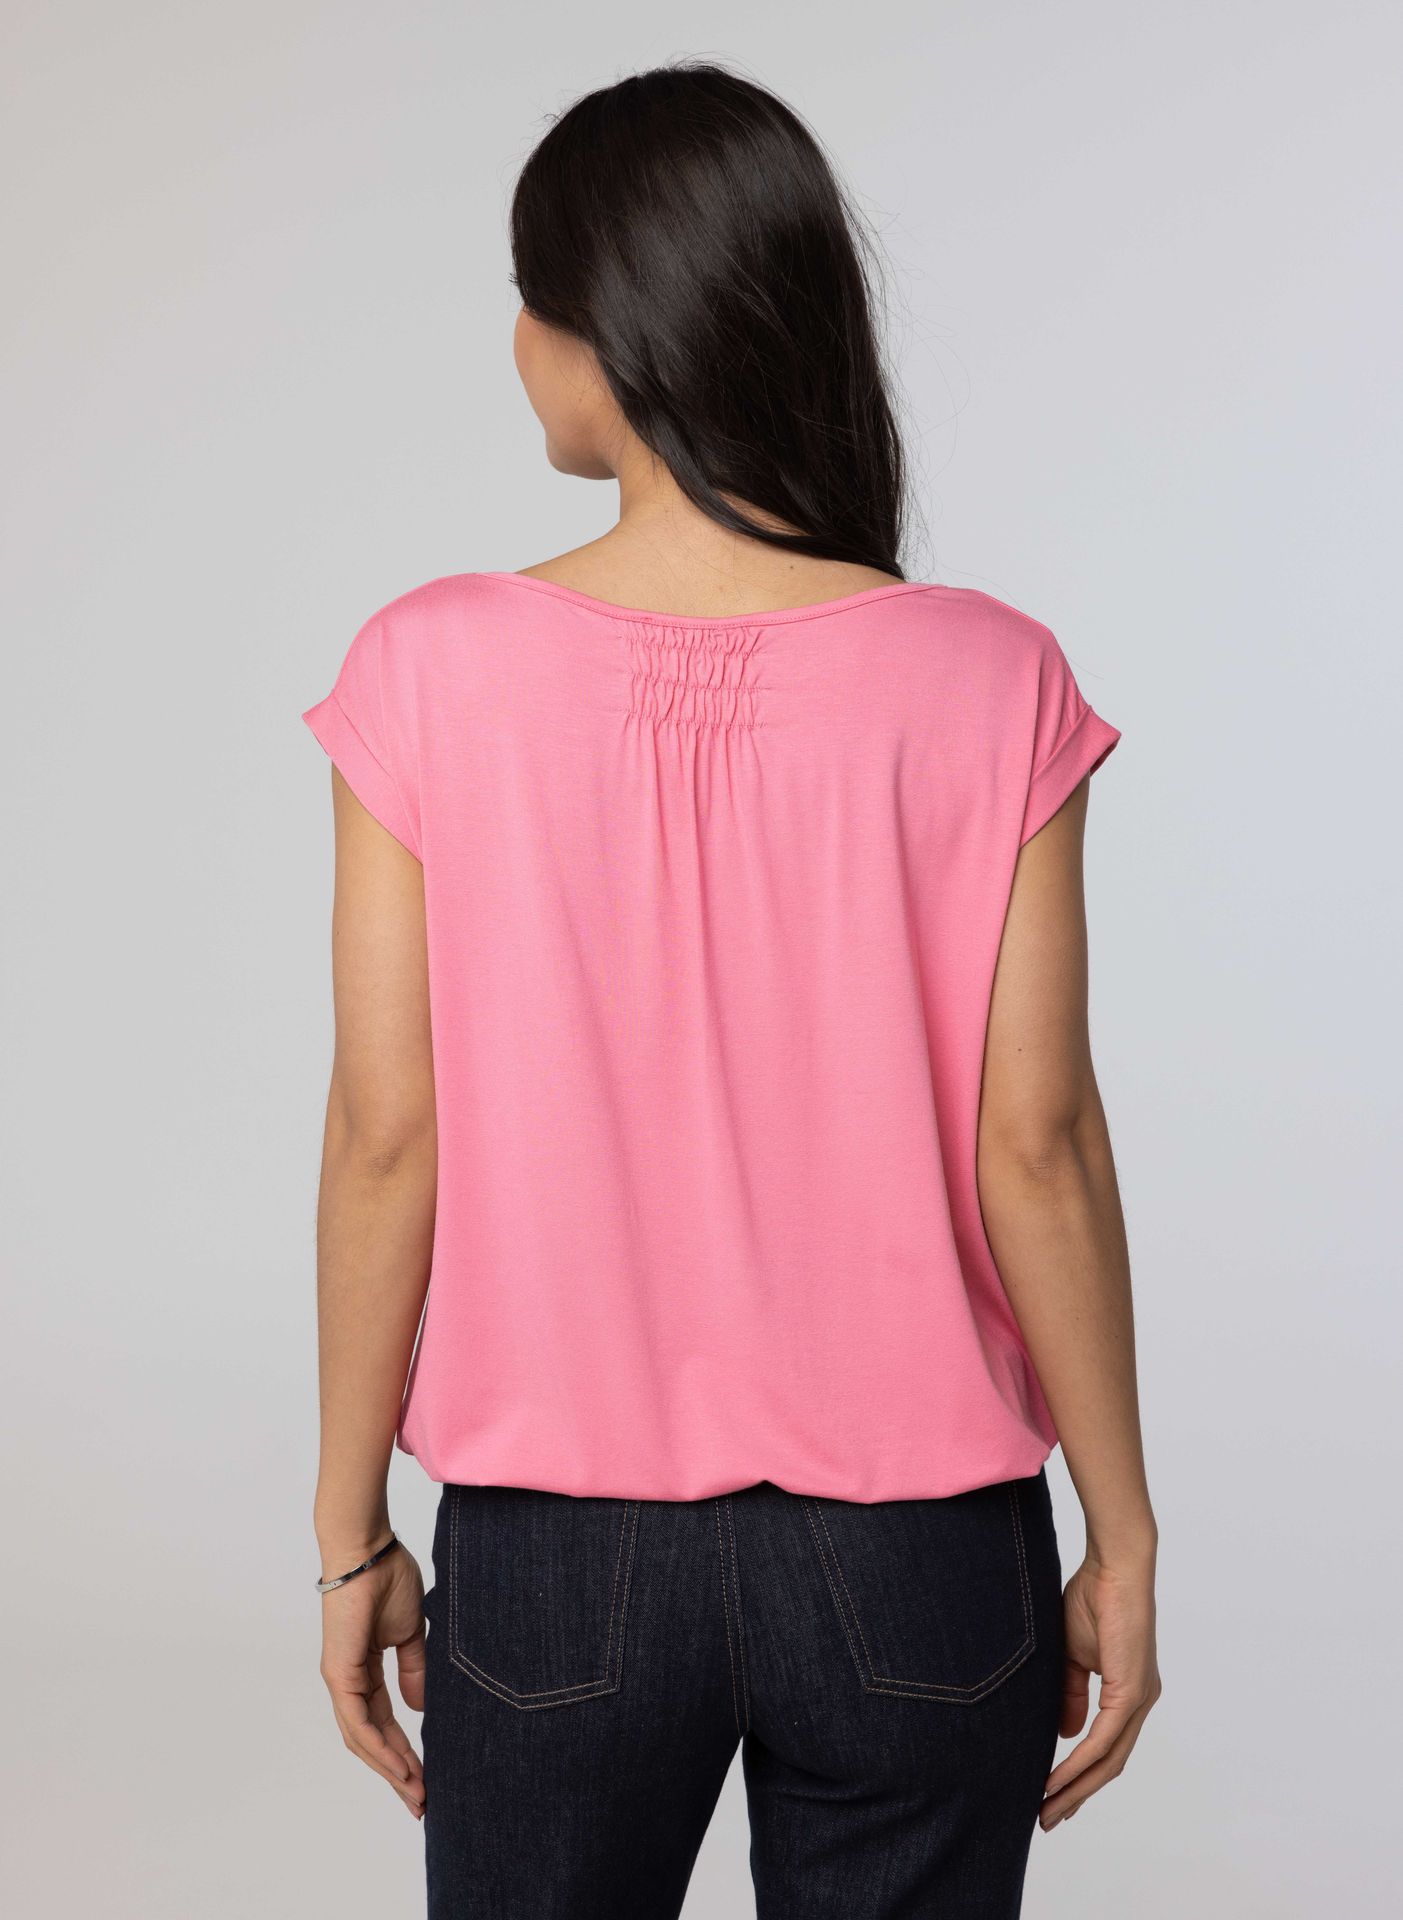 Norah Shirt Marije roze pink 203656-900